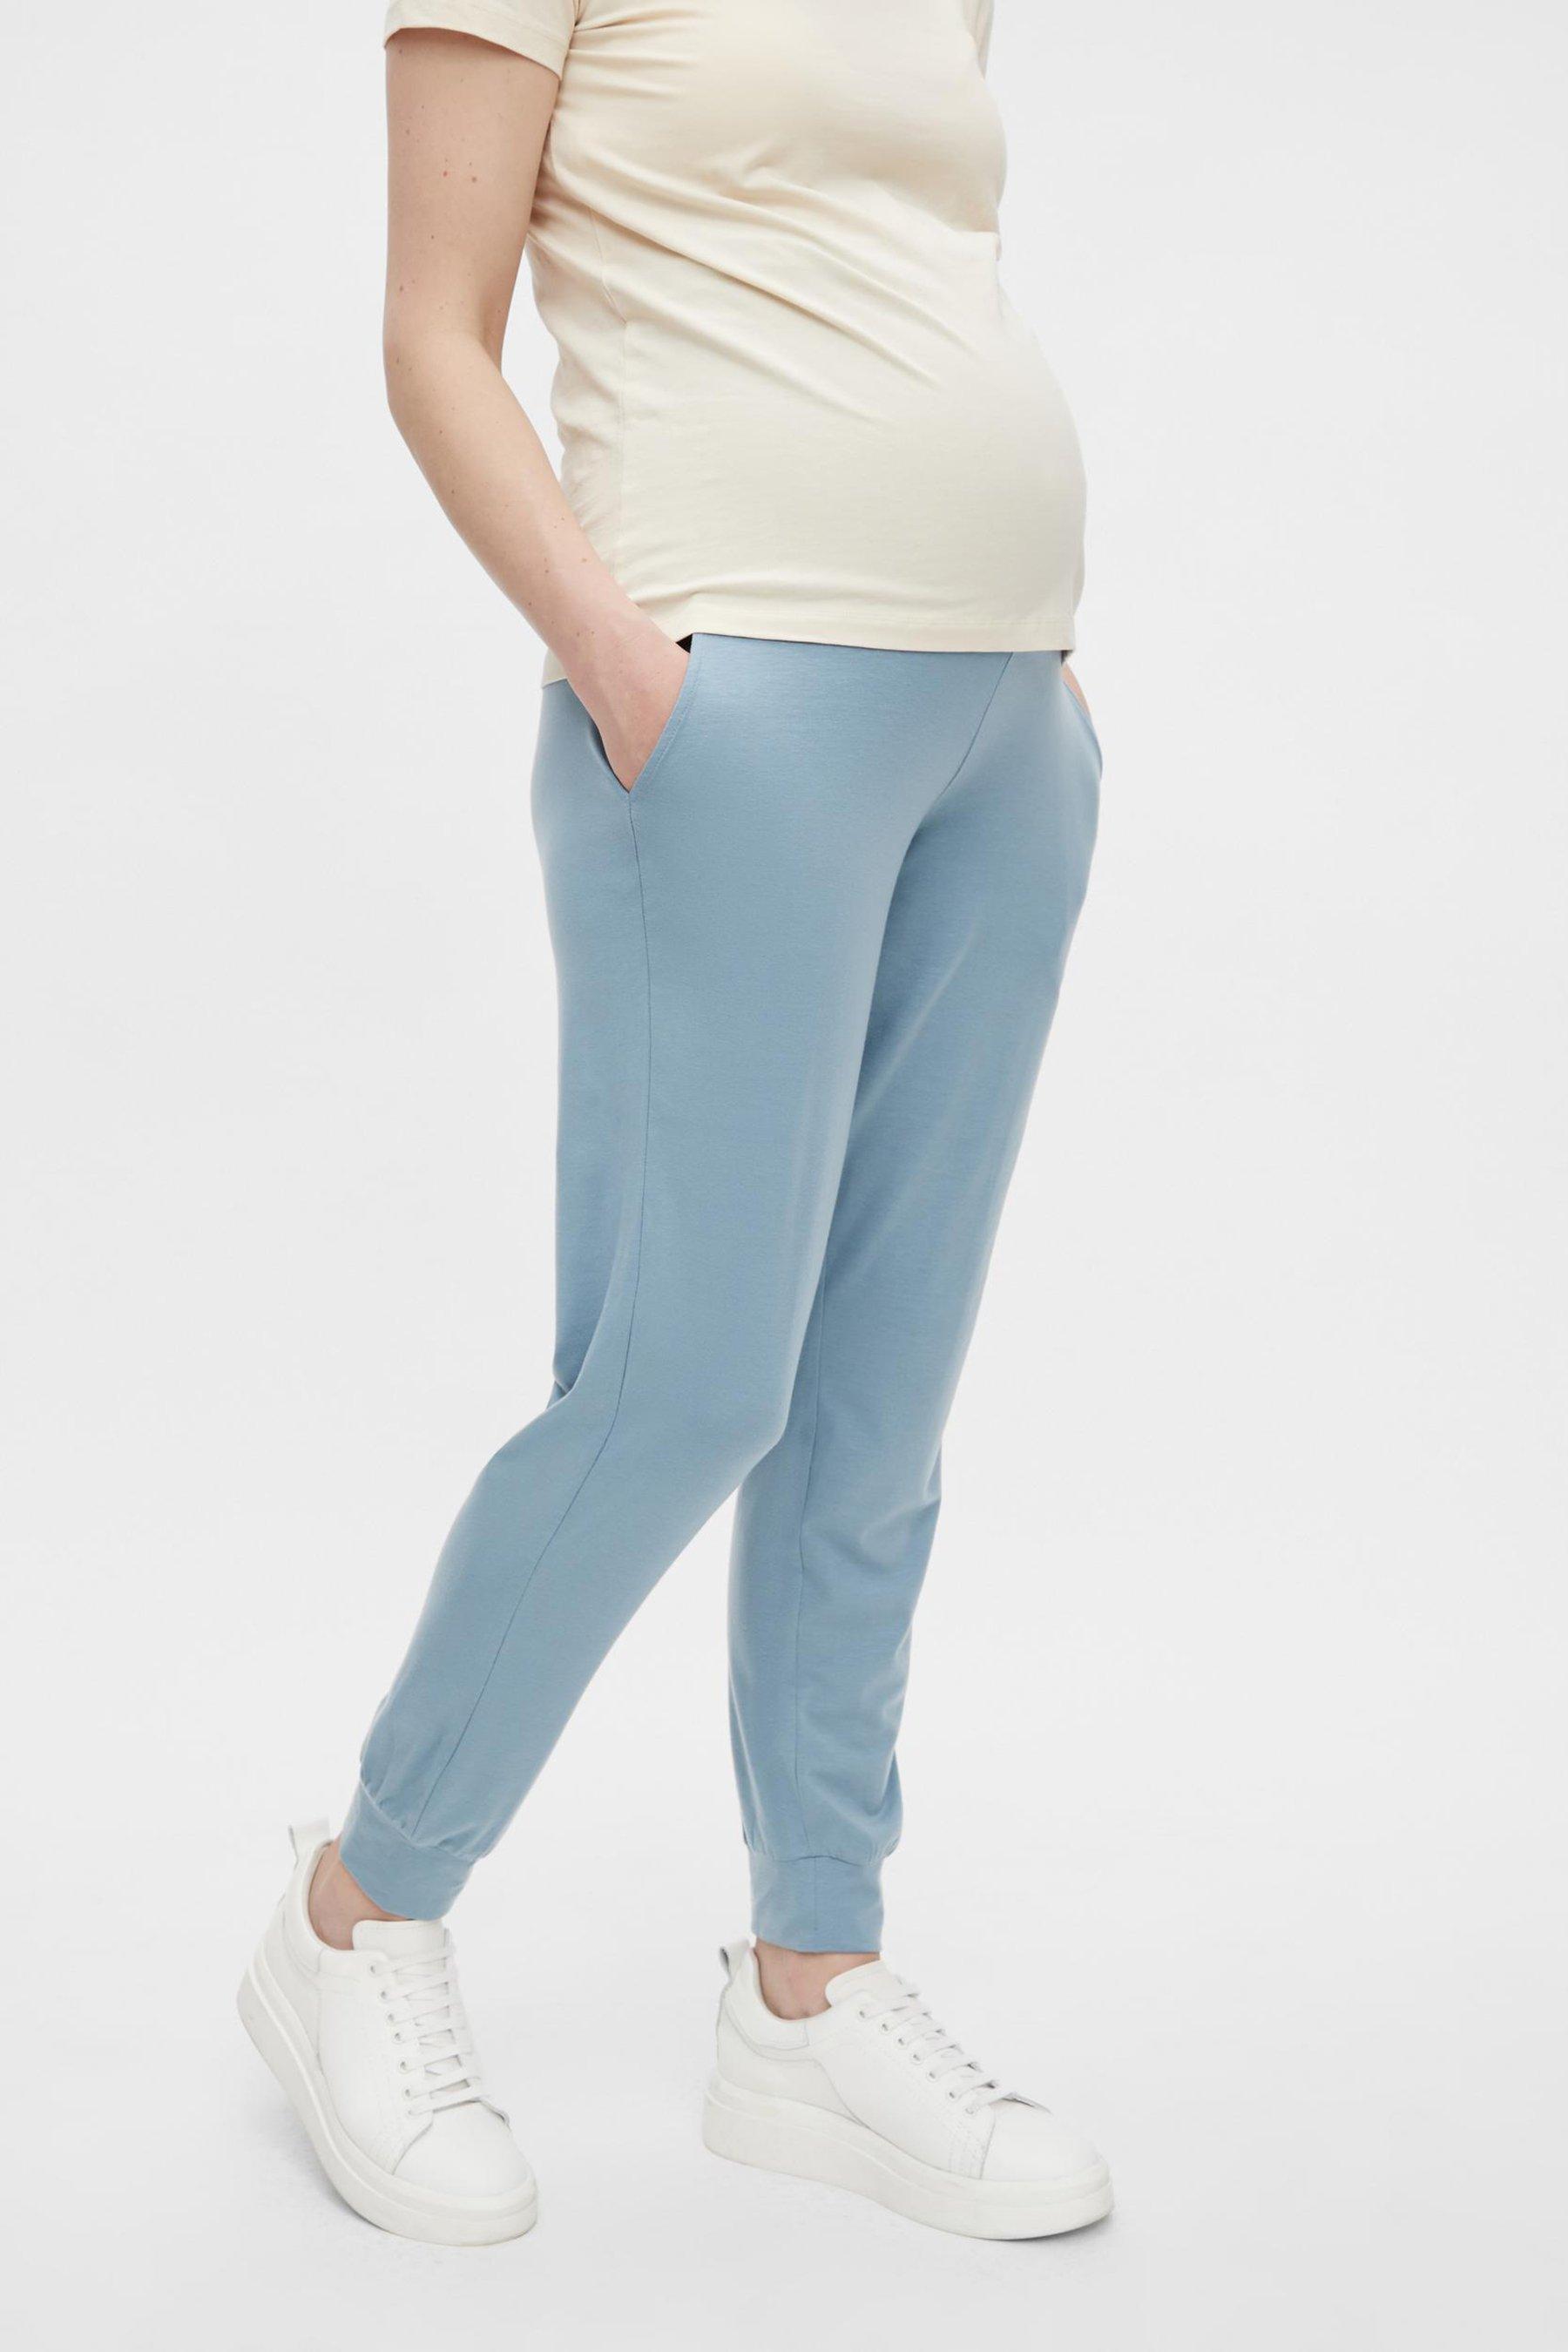 mamalicious mlcaylee citadel maternity jersey pants - womens - blue - size: small